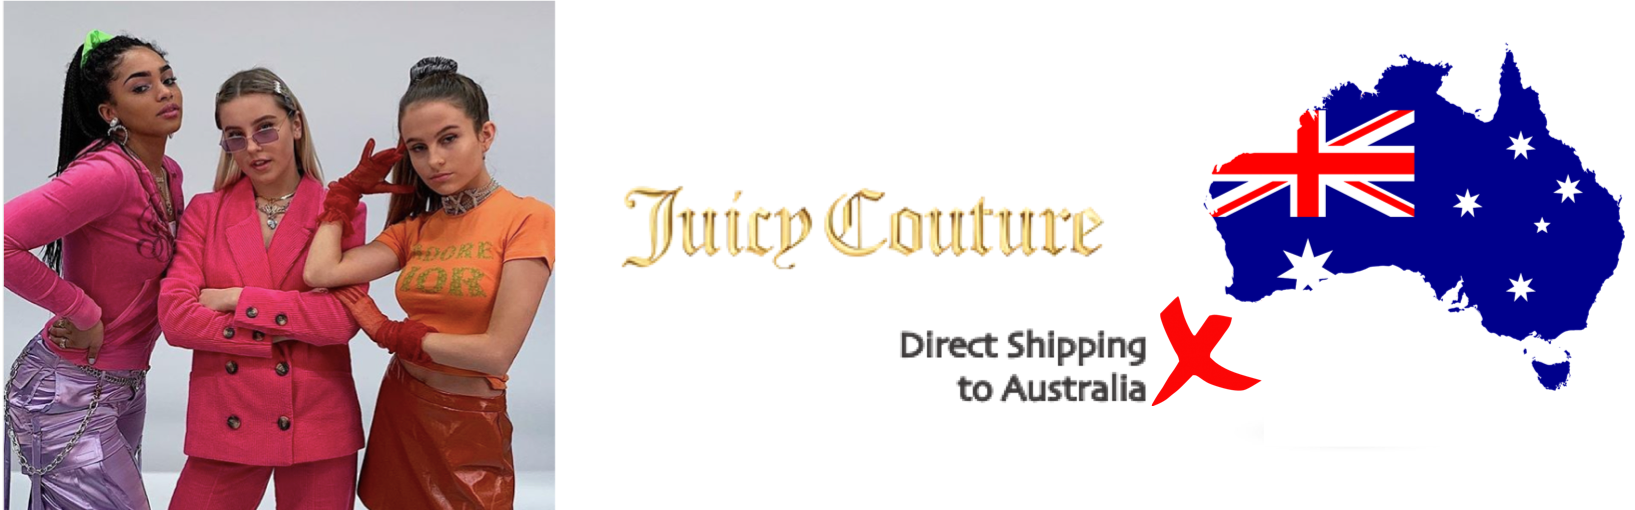 juicy couture australia